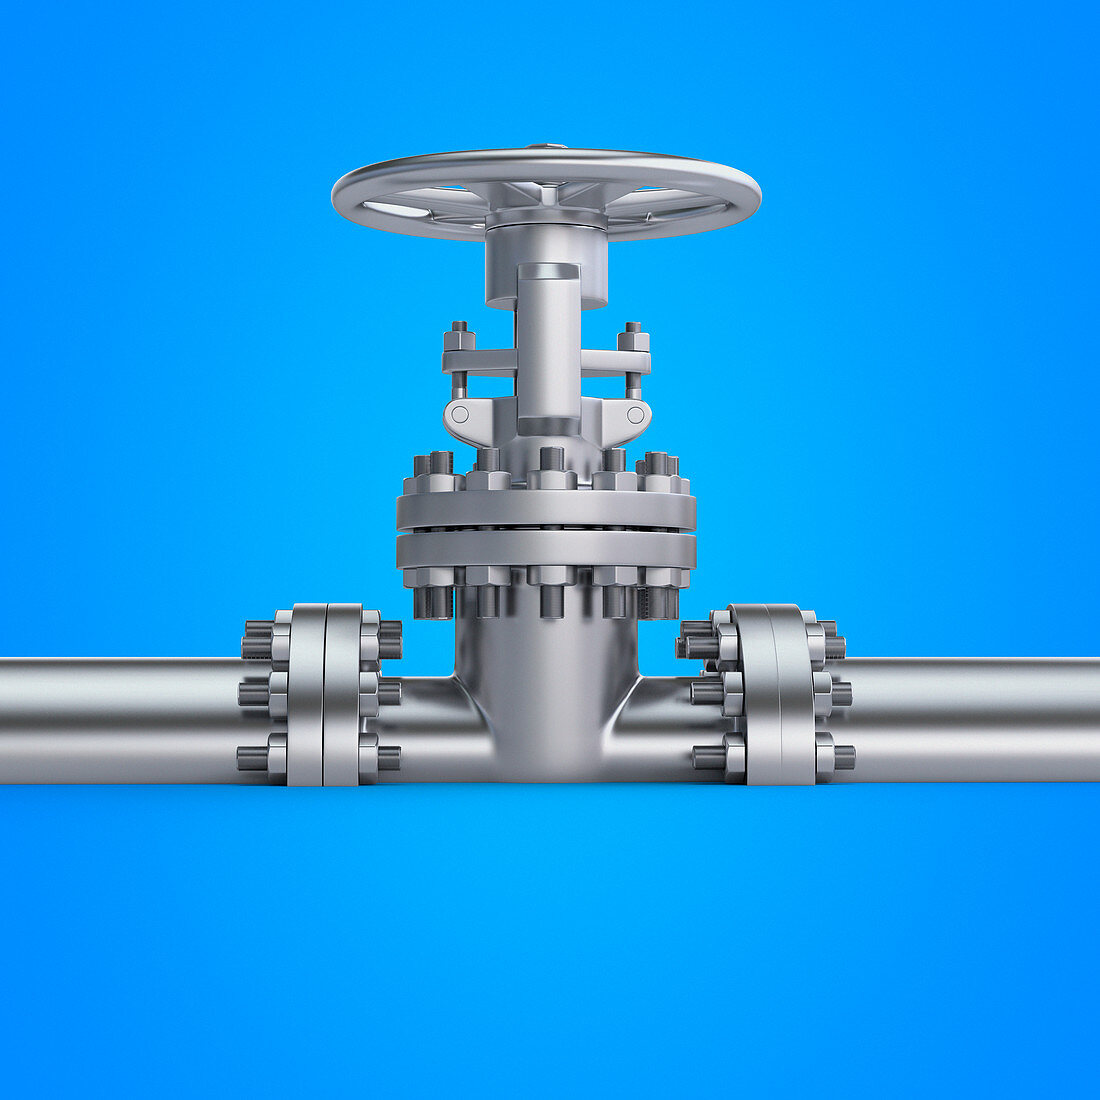 Illustration of a valve